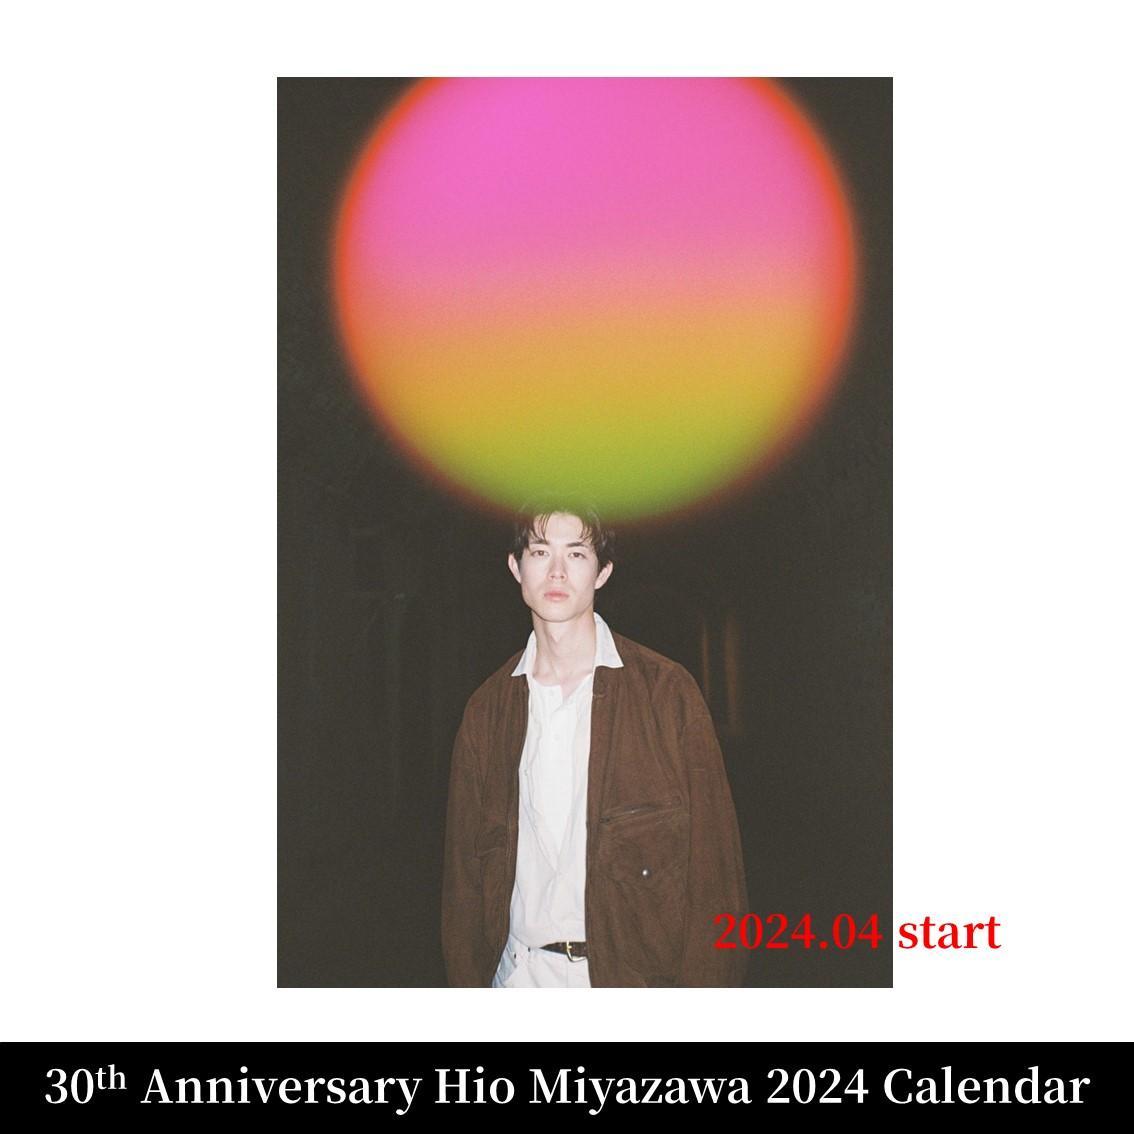 追加販売【受注期間限定】30th Anniversary Hio Miyazawa Calendar 2024 ※特典付き 